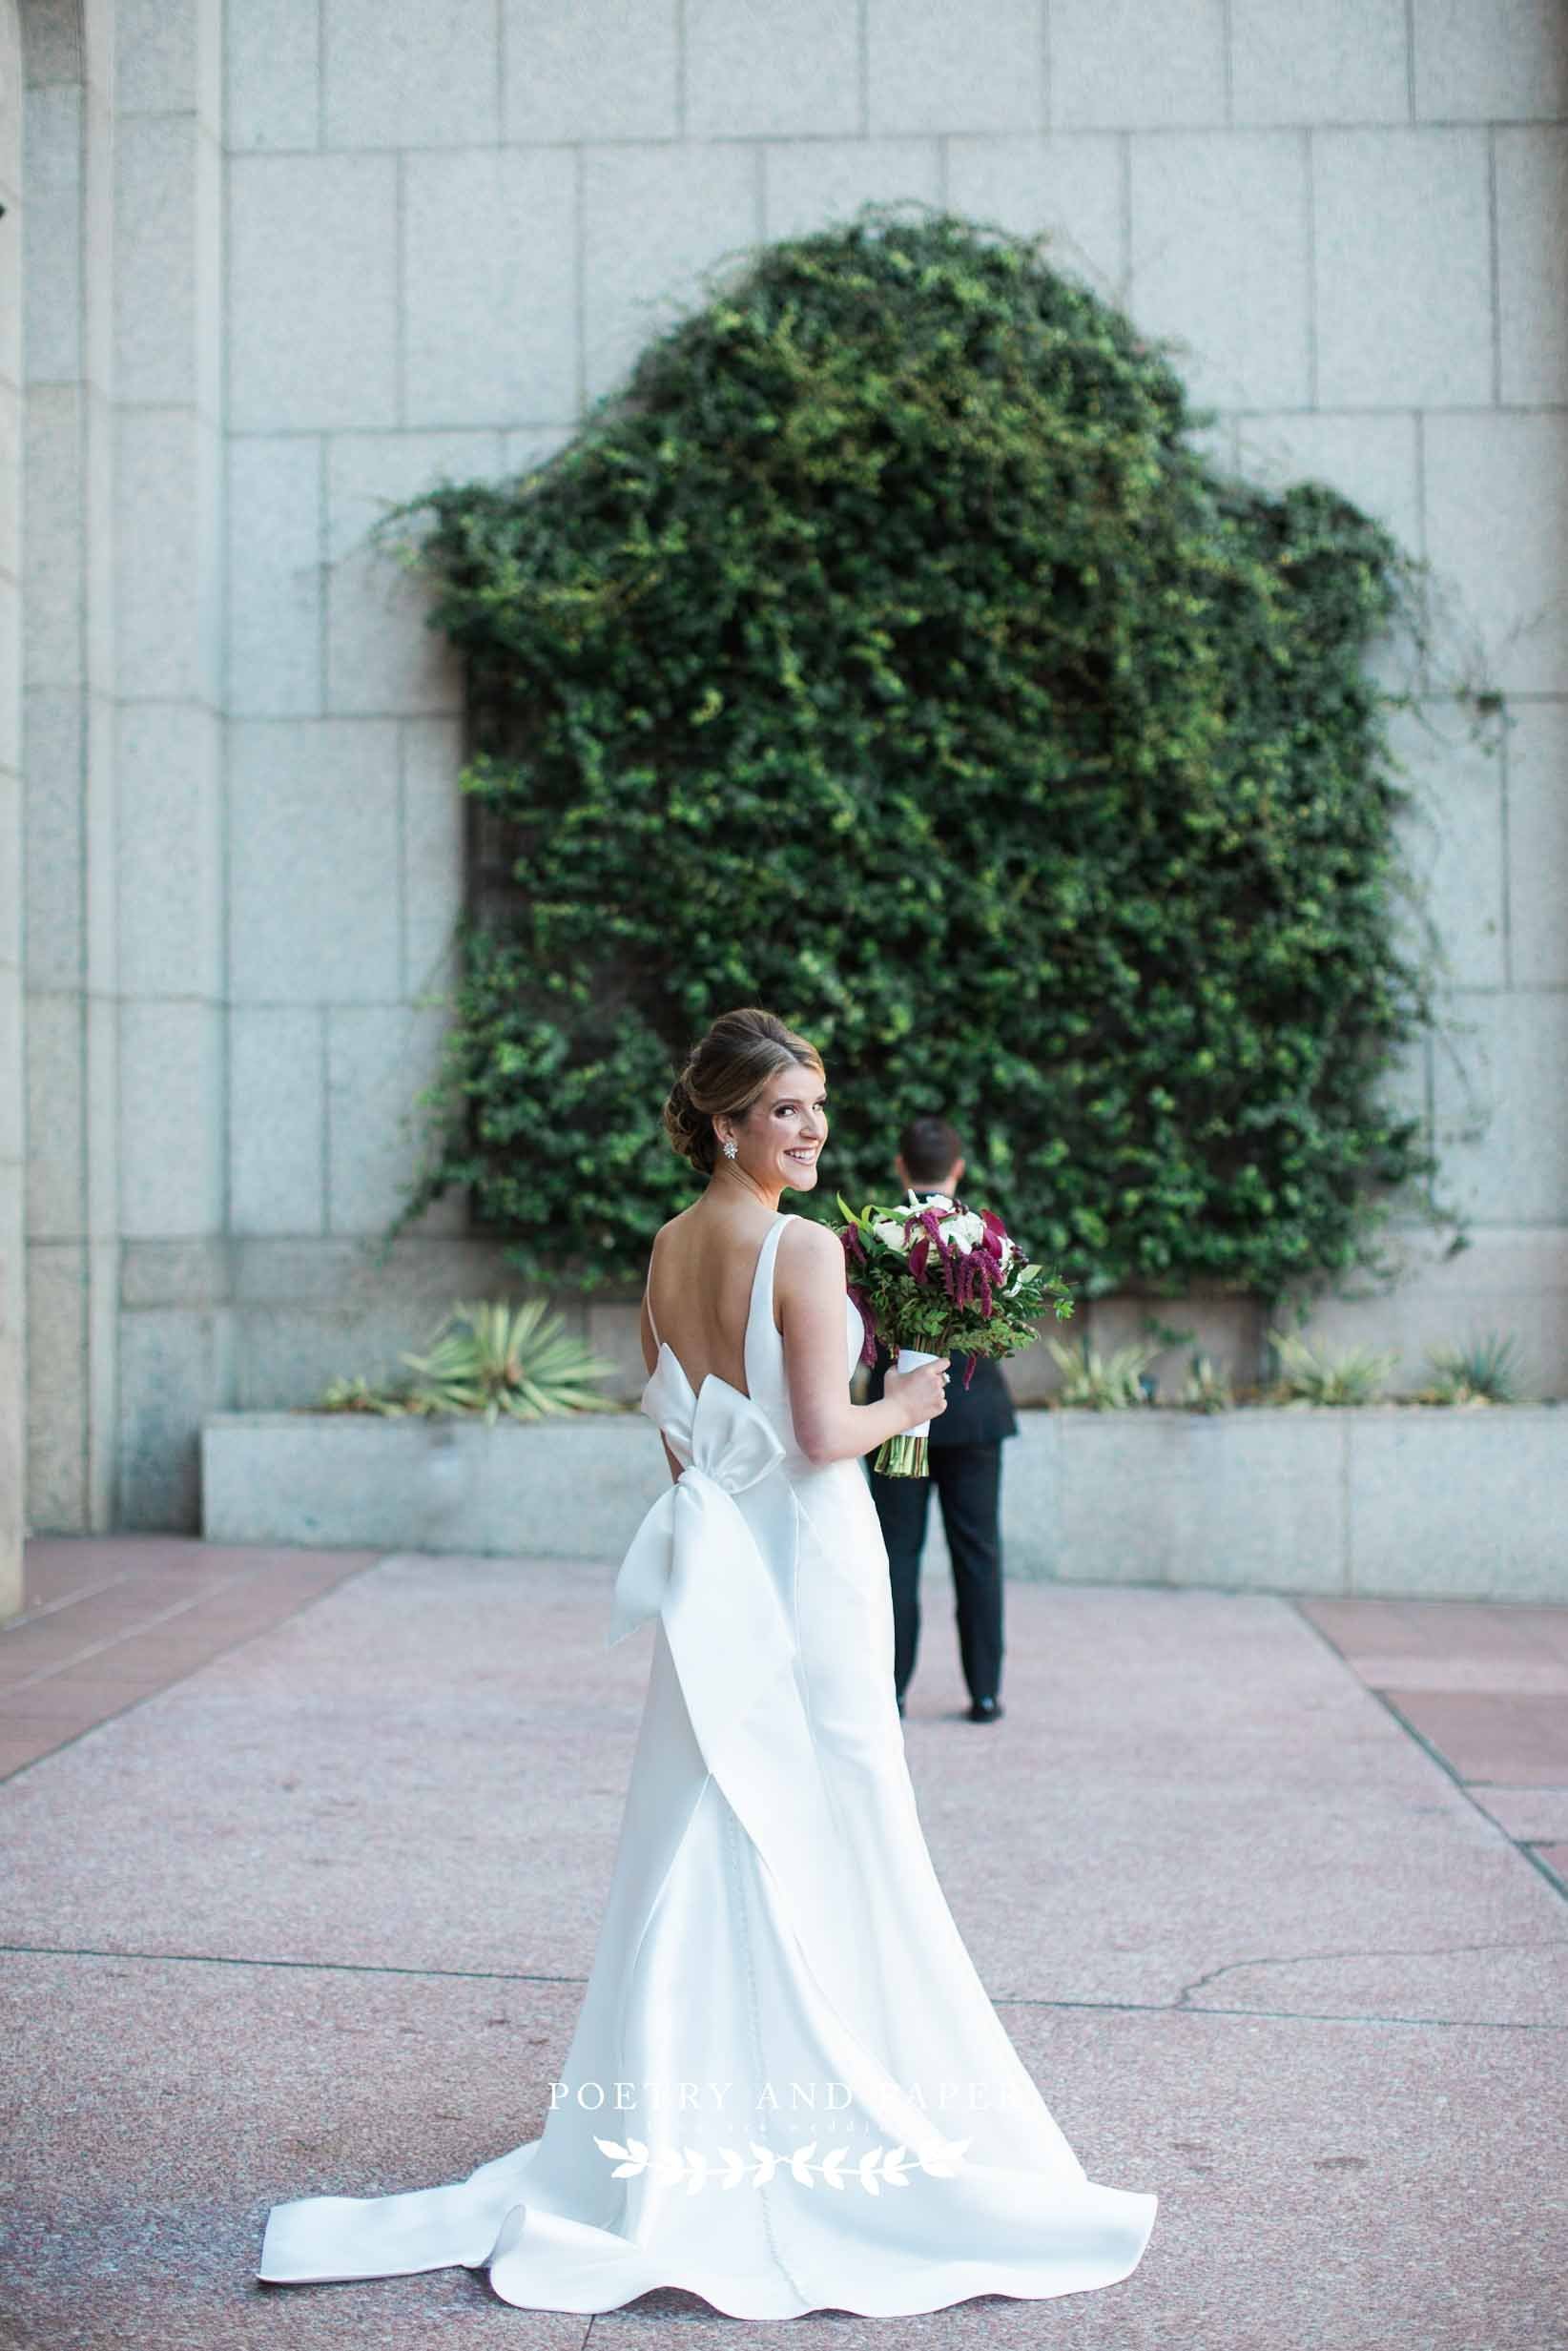 Ritz- Carolton and Capital City Club wedding- Top Atlanta wedding photographer- Dawn Johnson- bride smiling with groom surprise.jpg